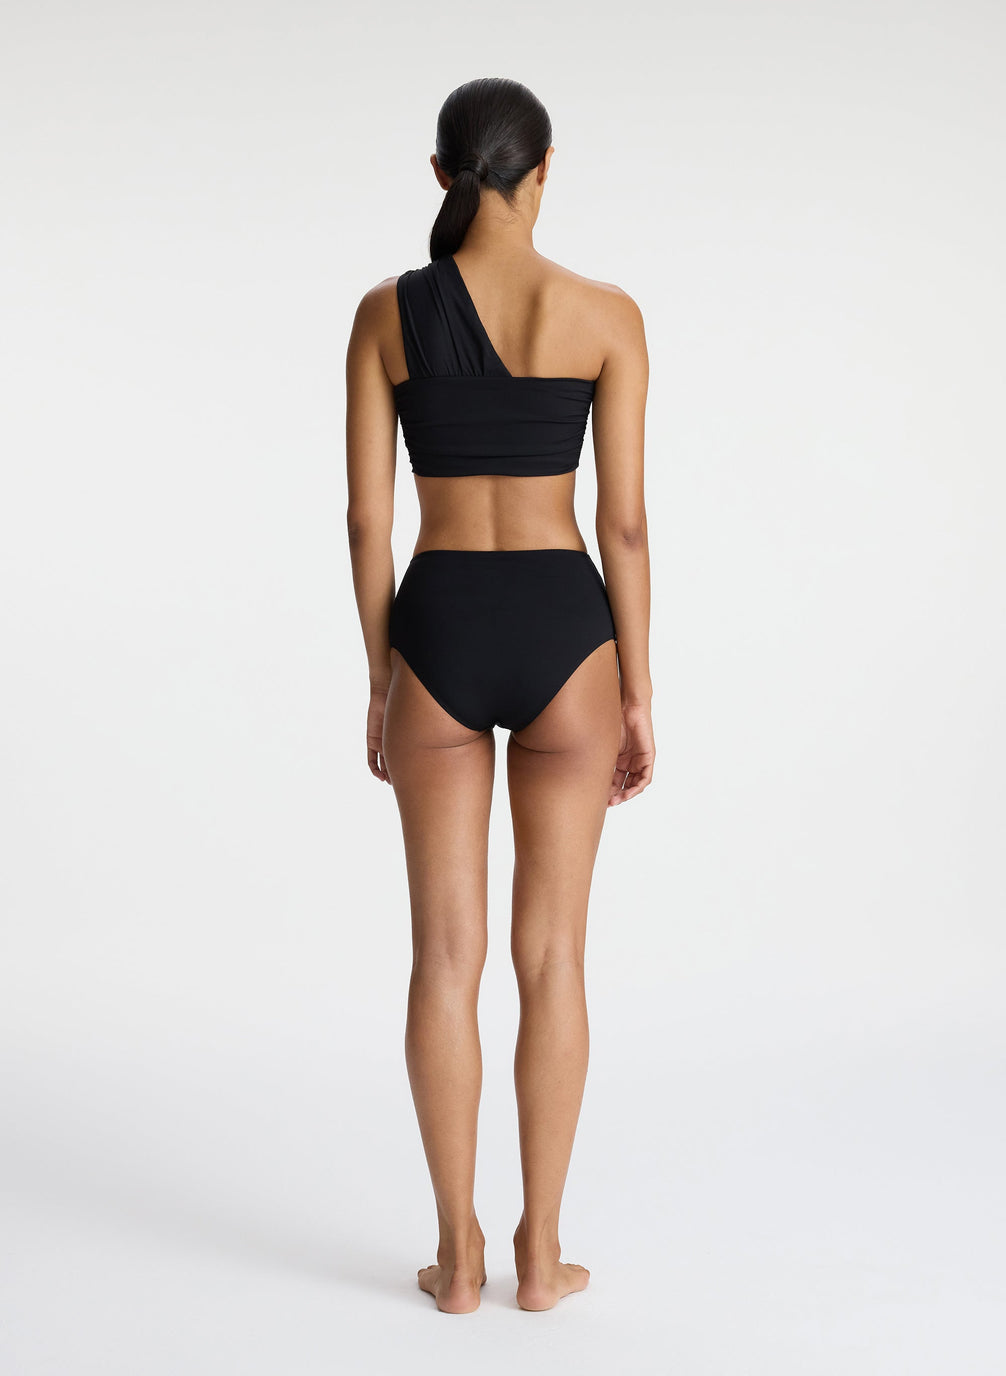 back view of woman wearing black one shoulder swim top and black bikini bottom